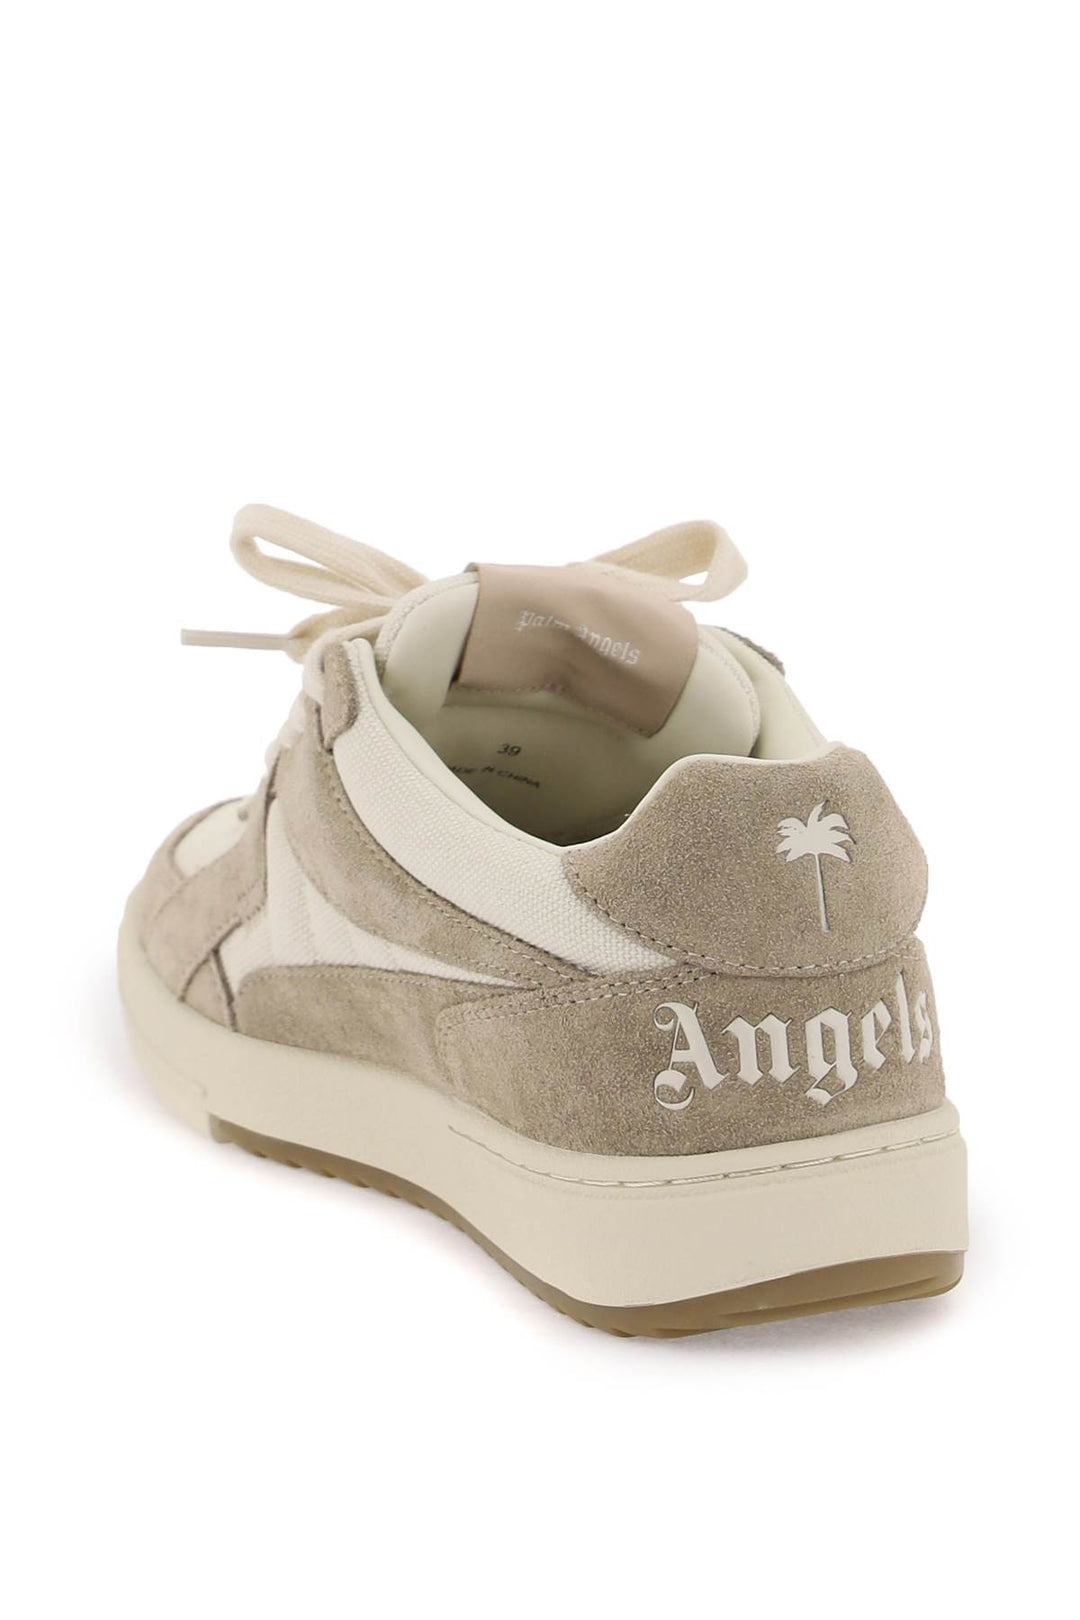 Palm Angels University Sneakers   Beige